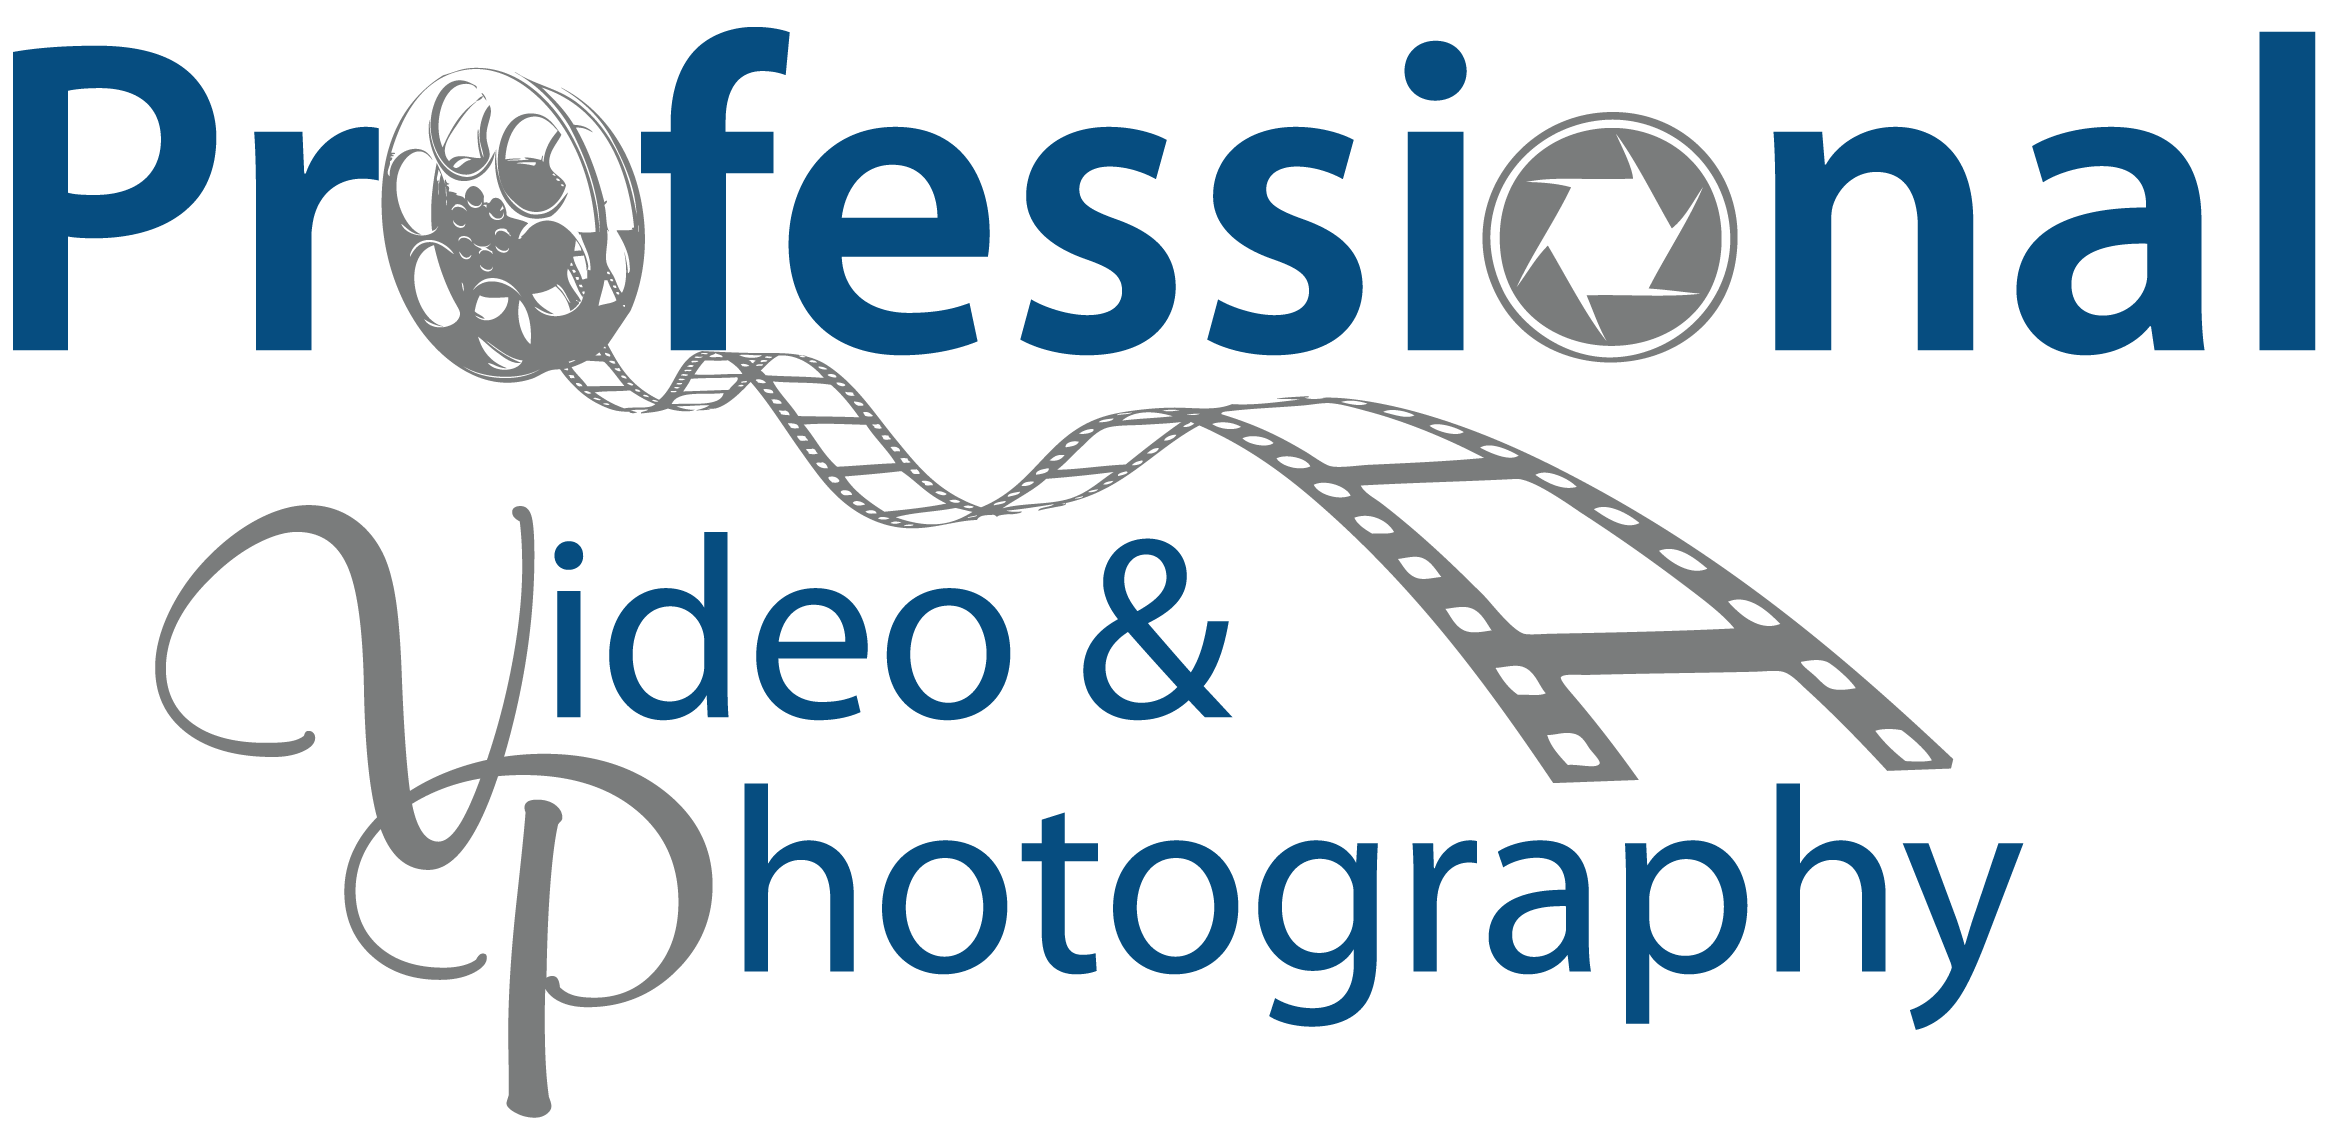 Professional Video & Photography logo